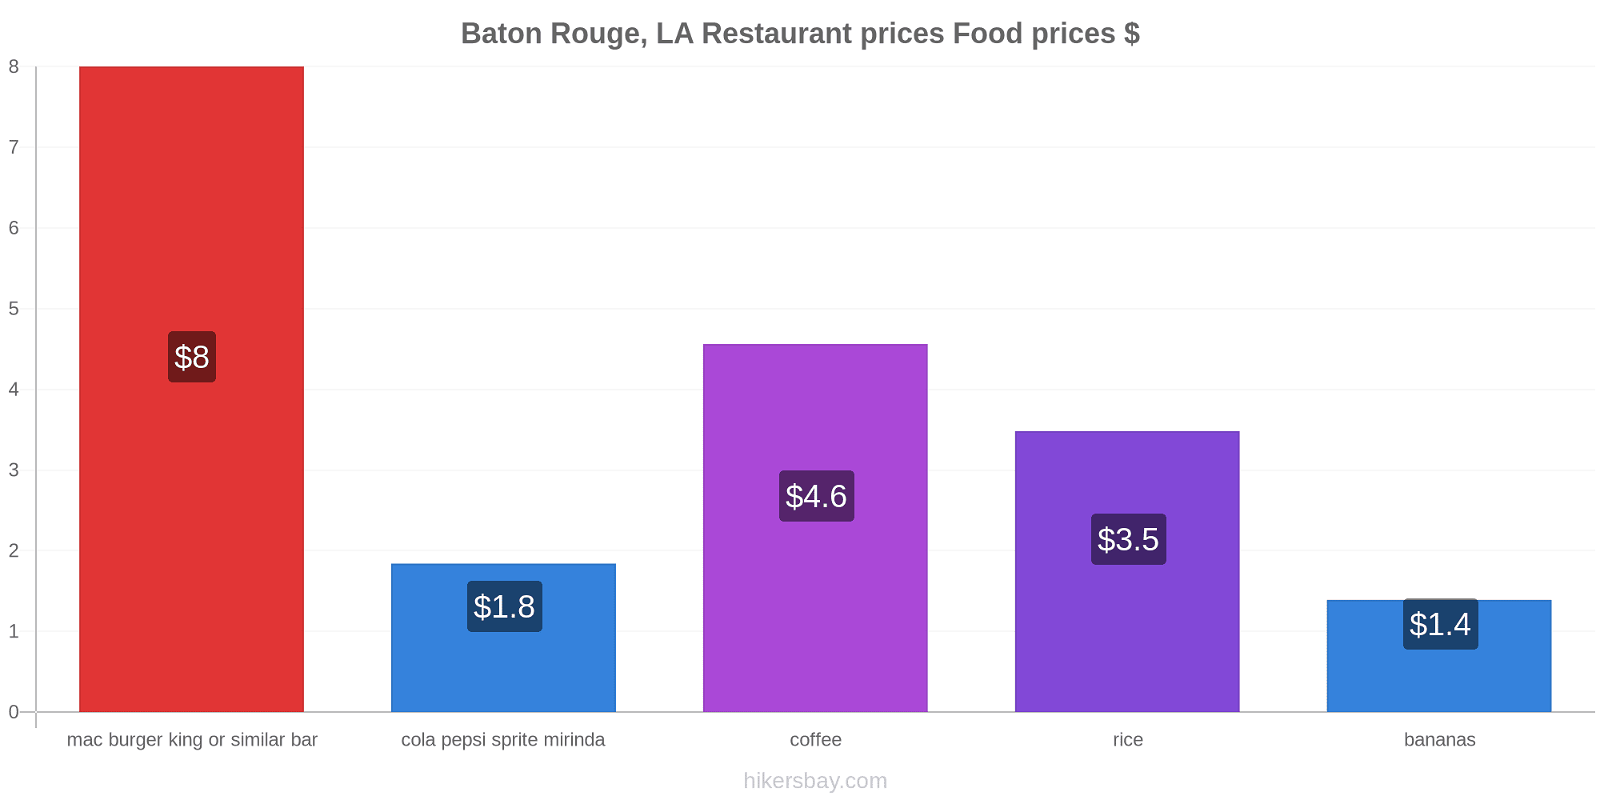 Baton Rouge, LA price changes hikersbay.com